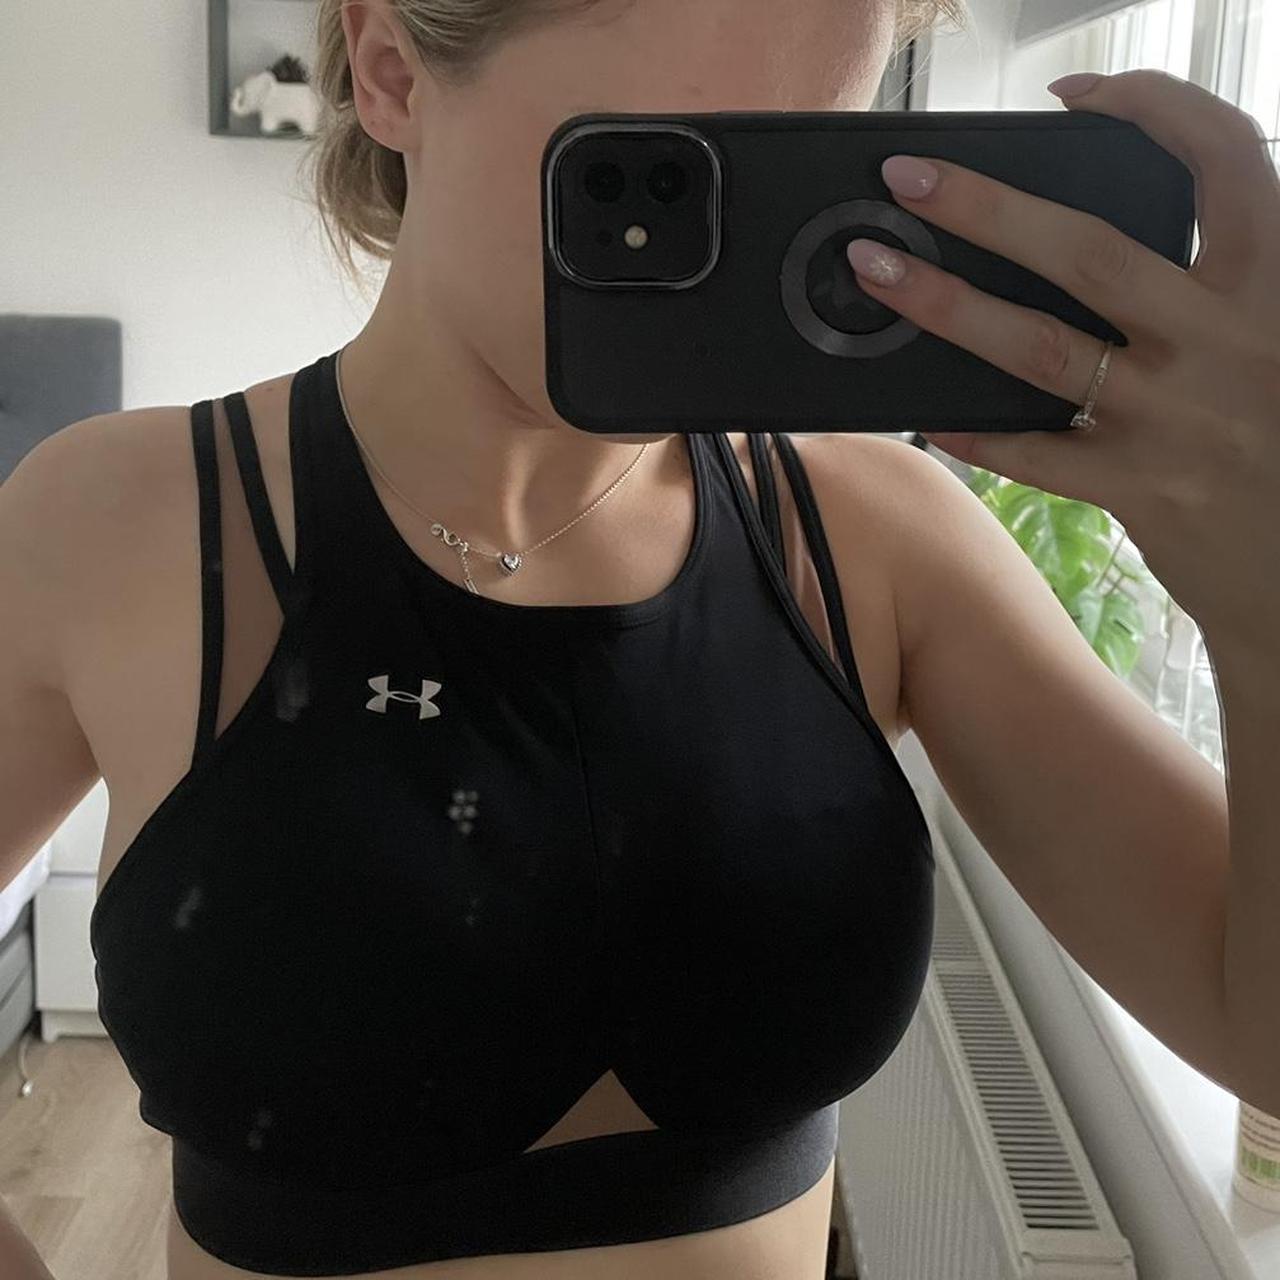 COTTON ON BODY grey and black sports bras 🥊🥊🥊 both - Depop